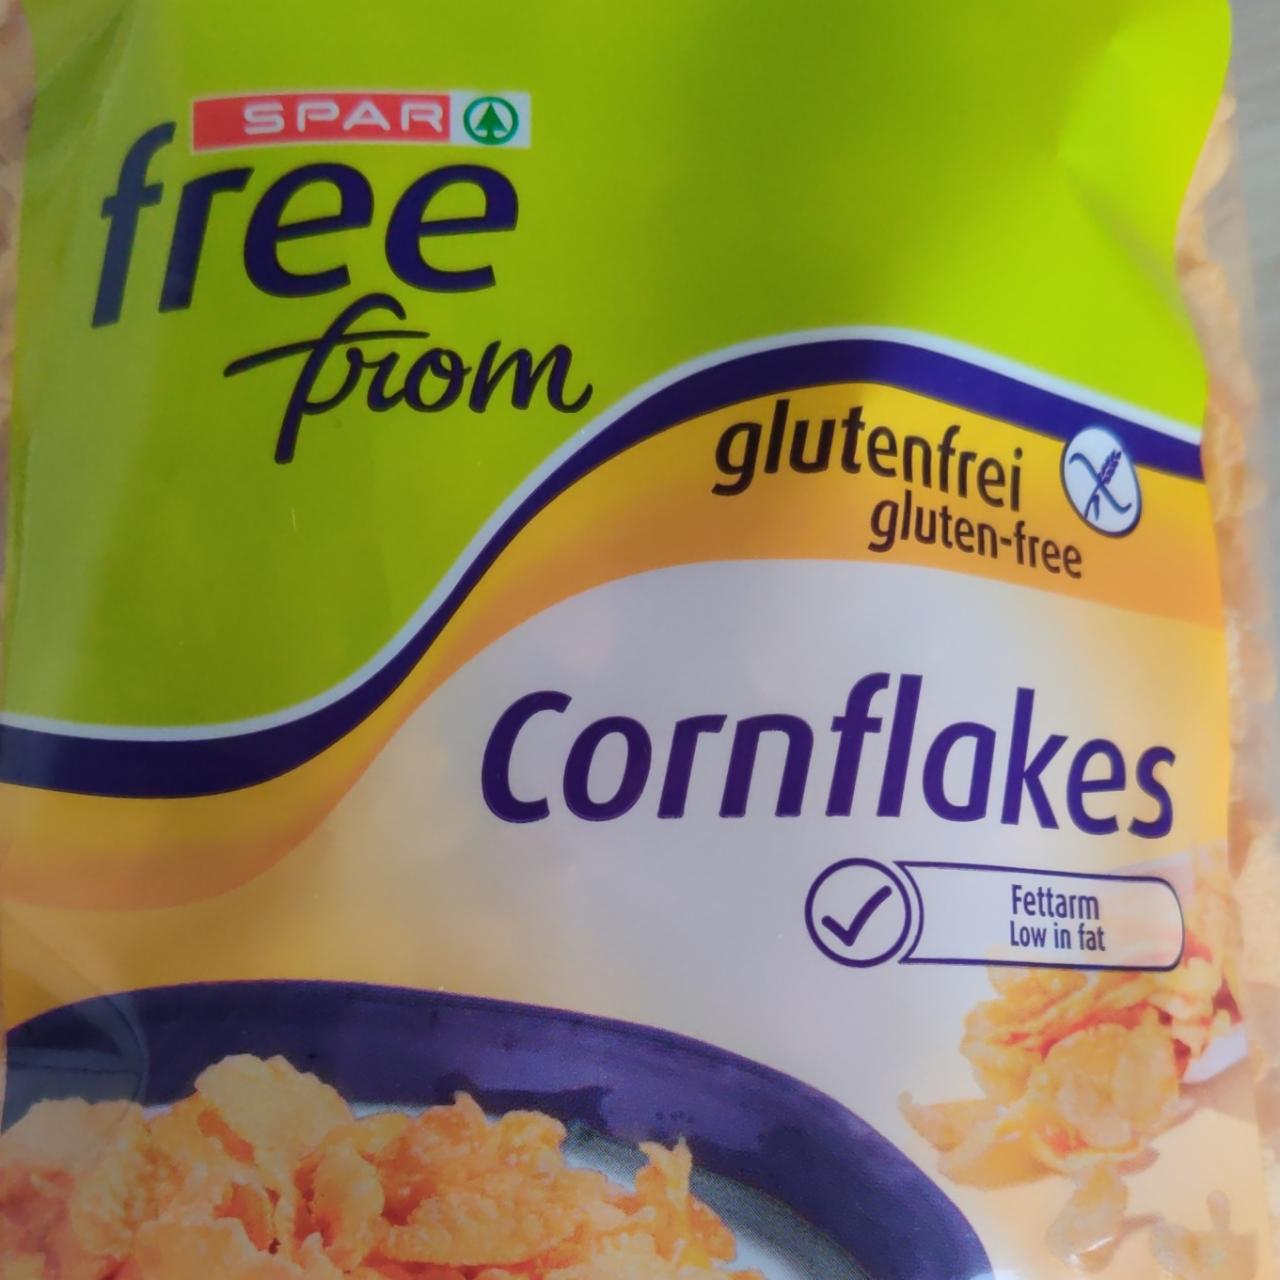 Képek - Cornflakes gluten-free Spar